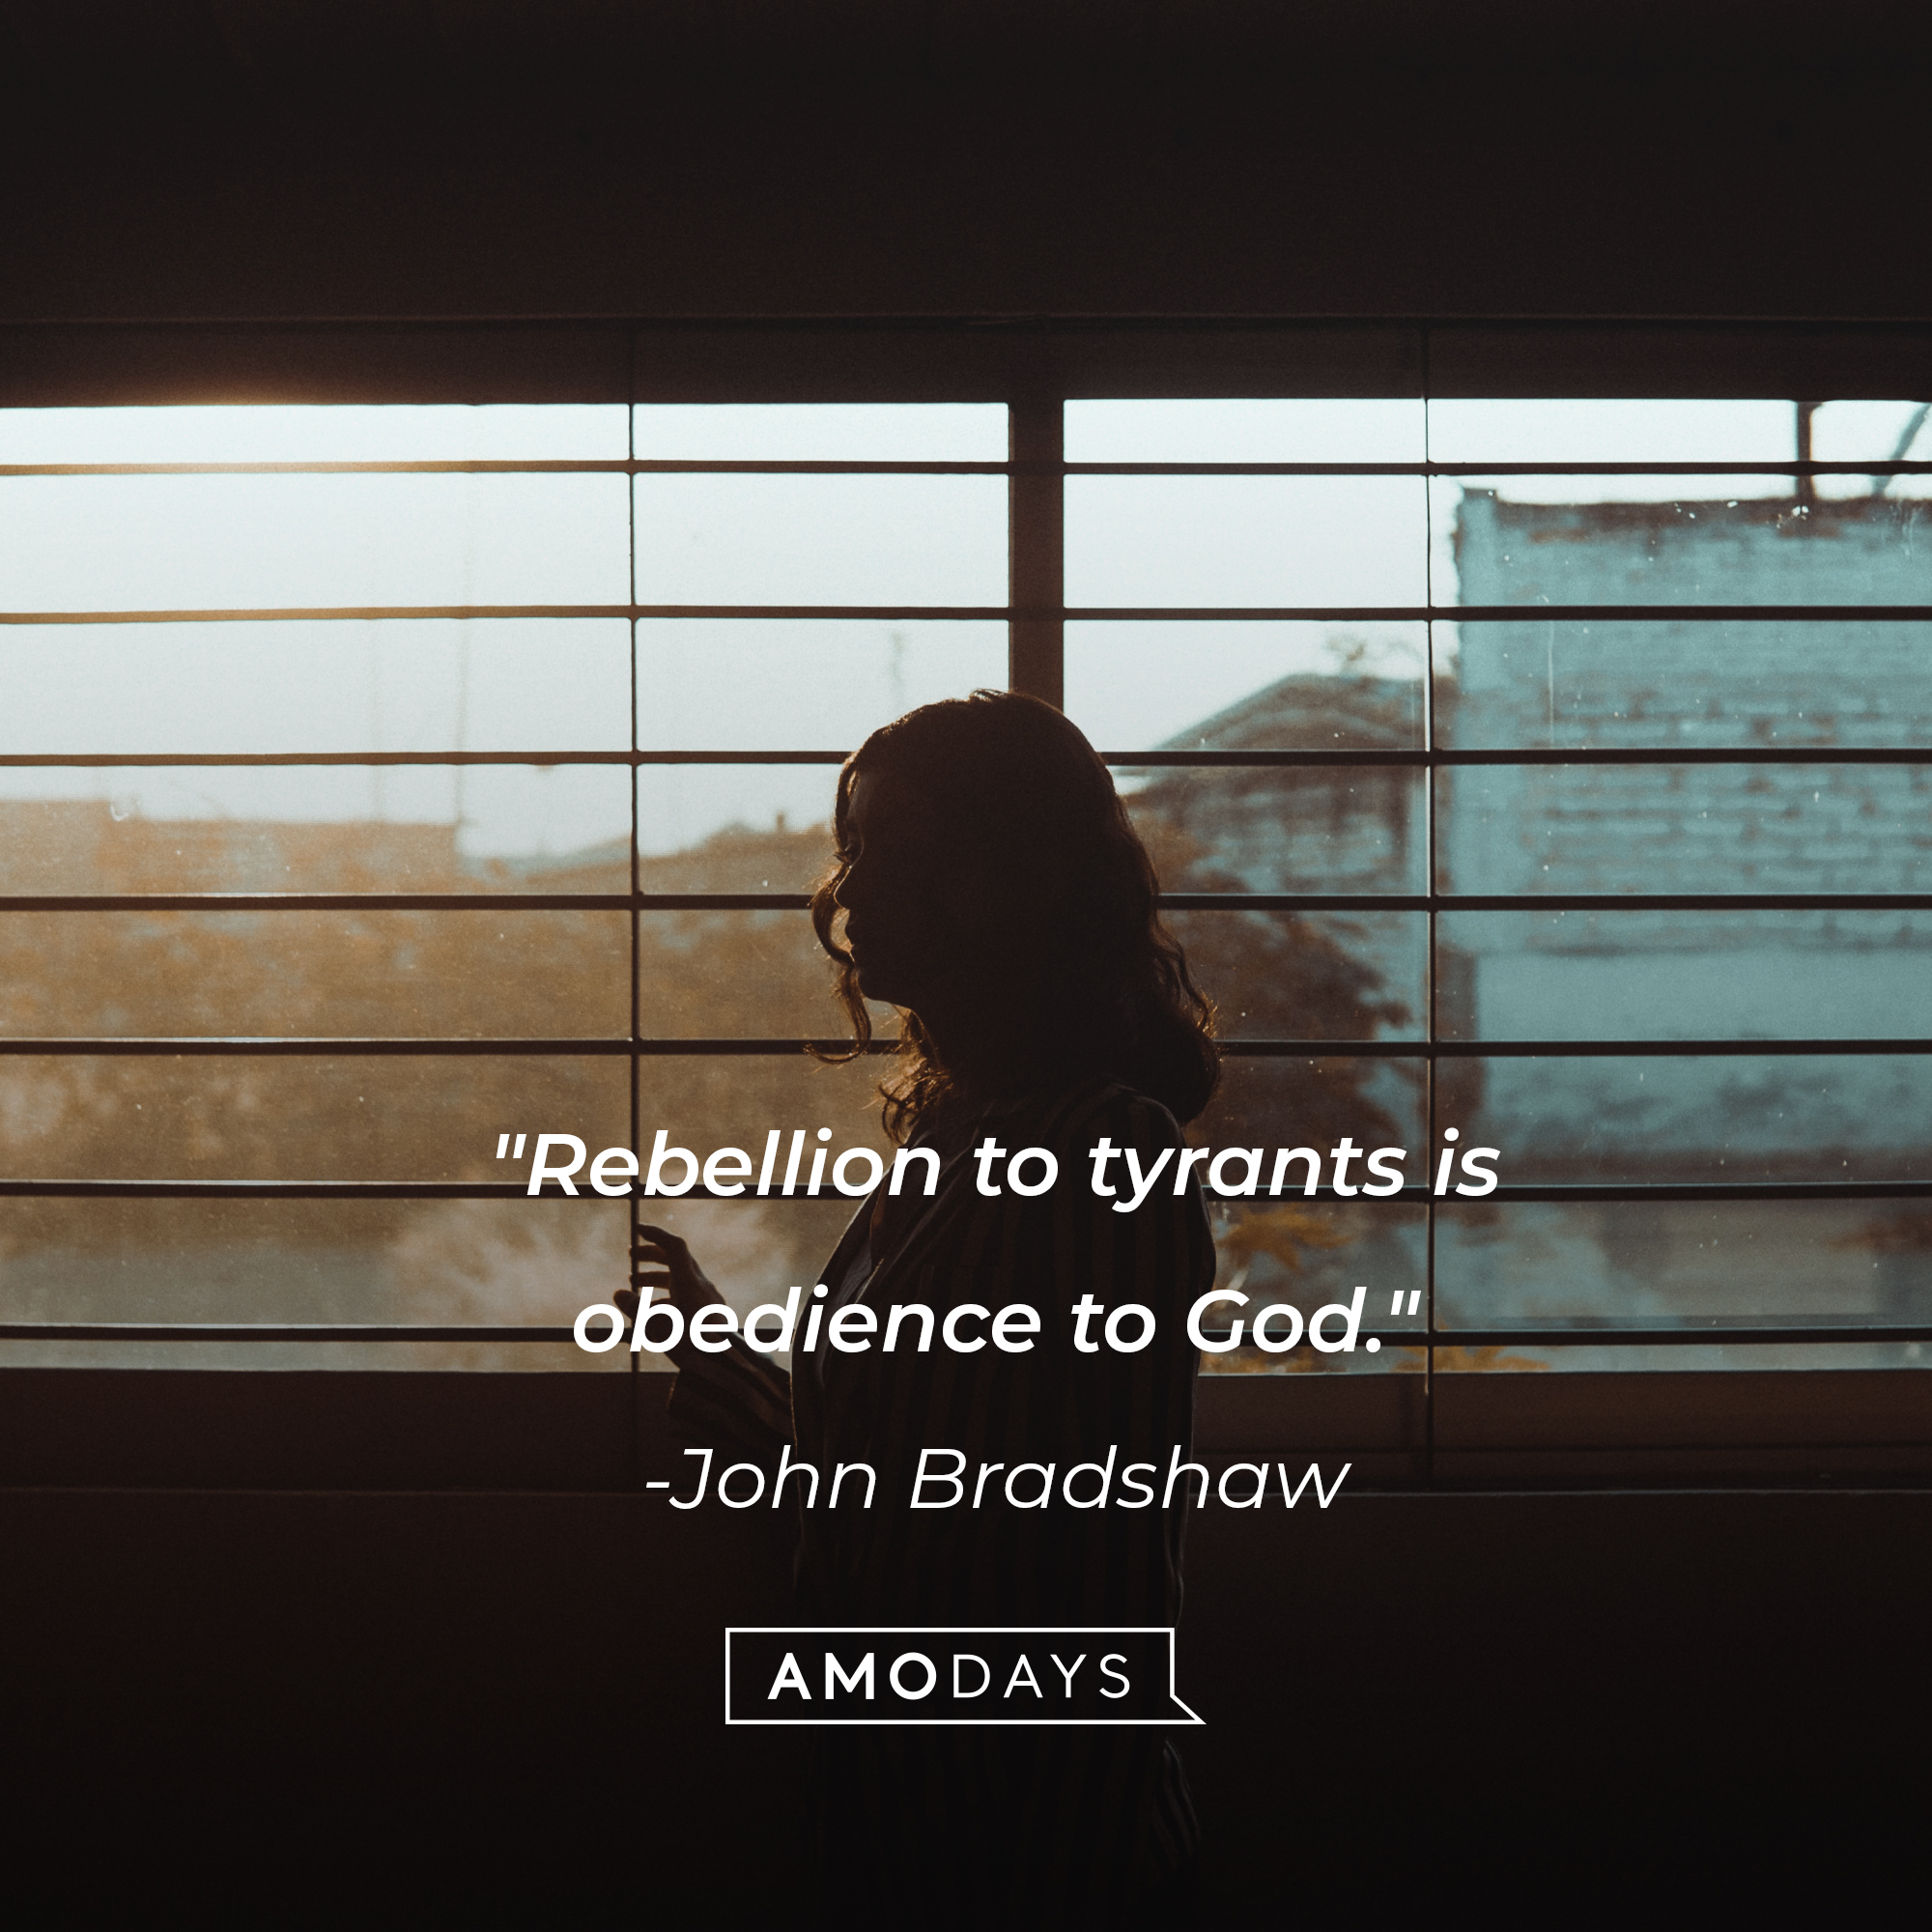 John Bradshaw's quote: "Rebellion to tyrants is obedience to God." | Image: AmoDays